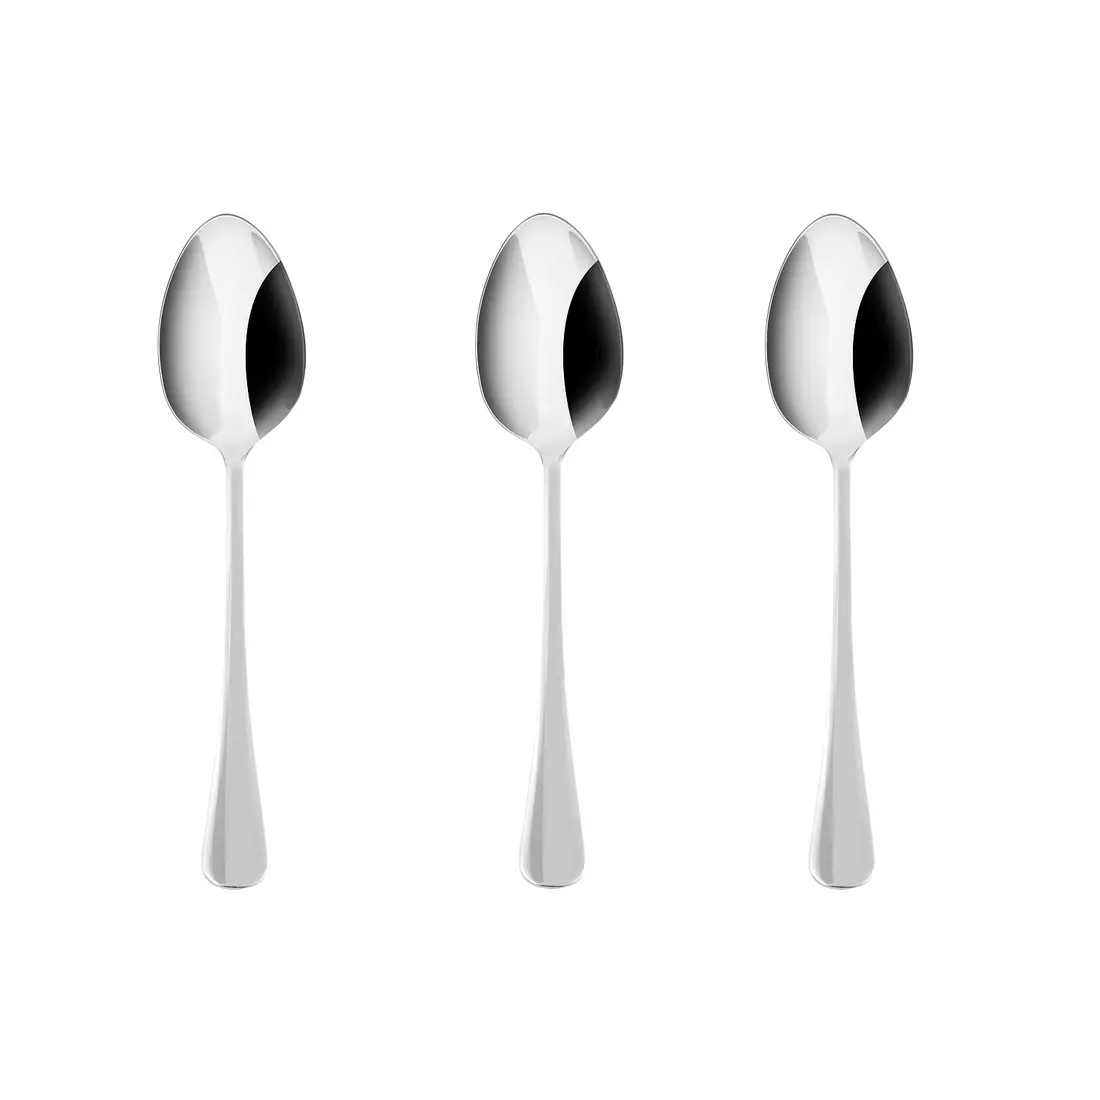 KULIG PAROS set of 3 dinner spoons, silver